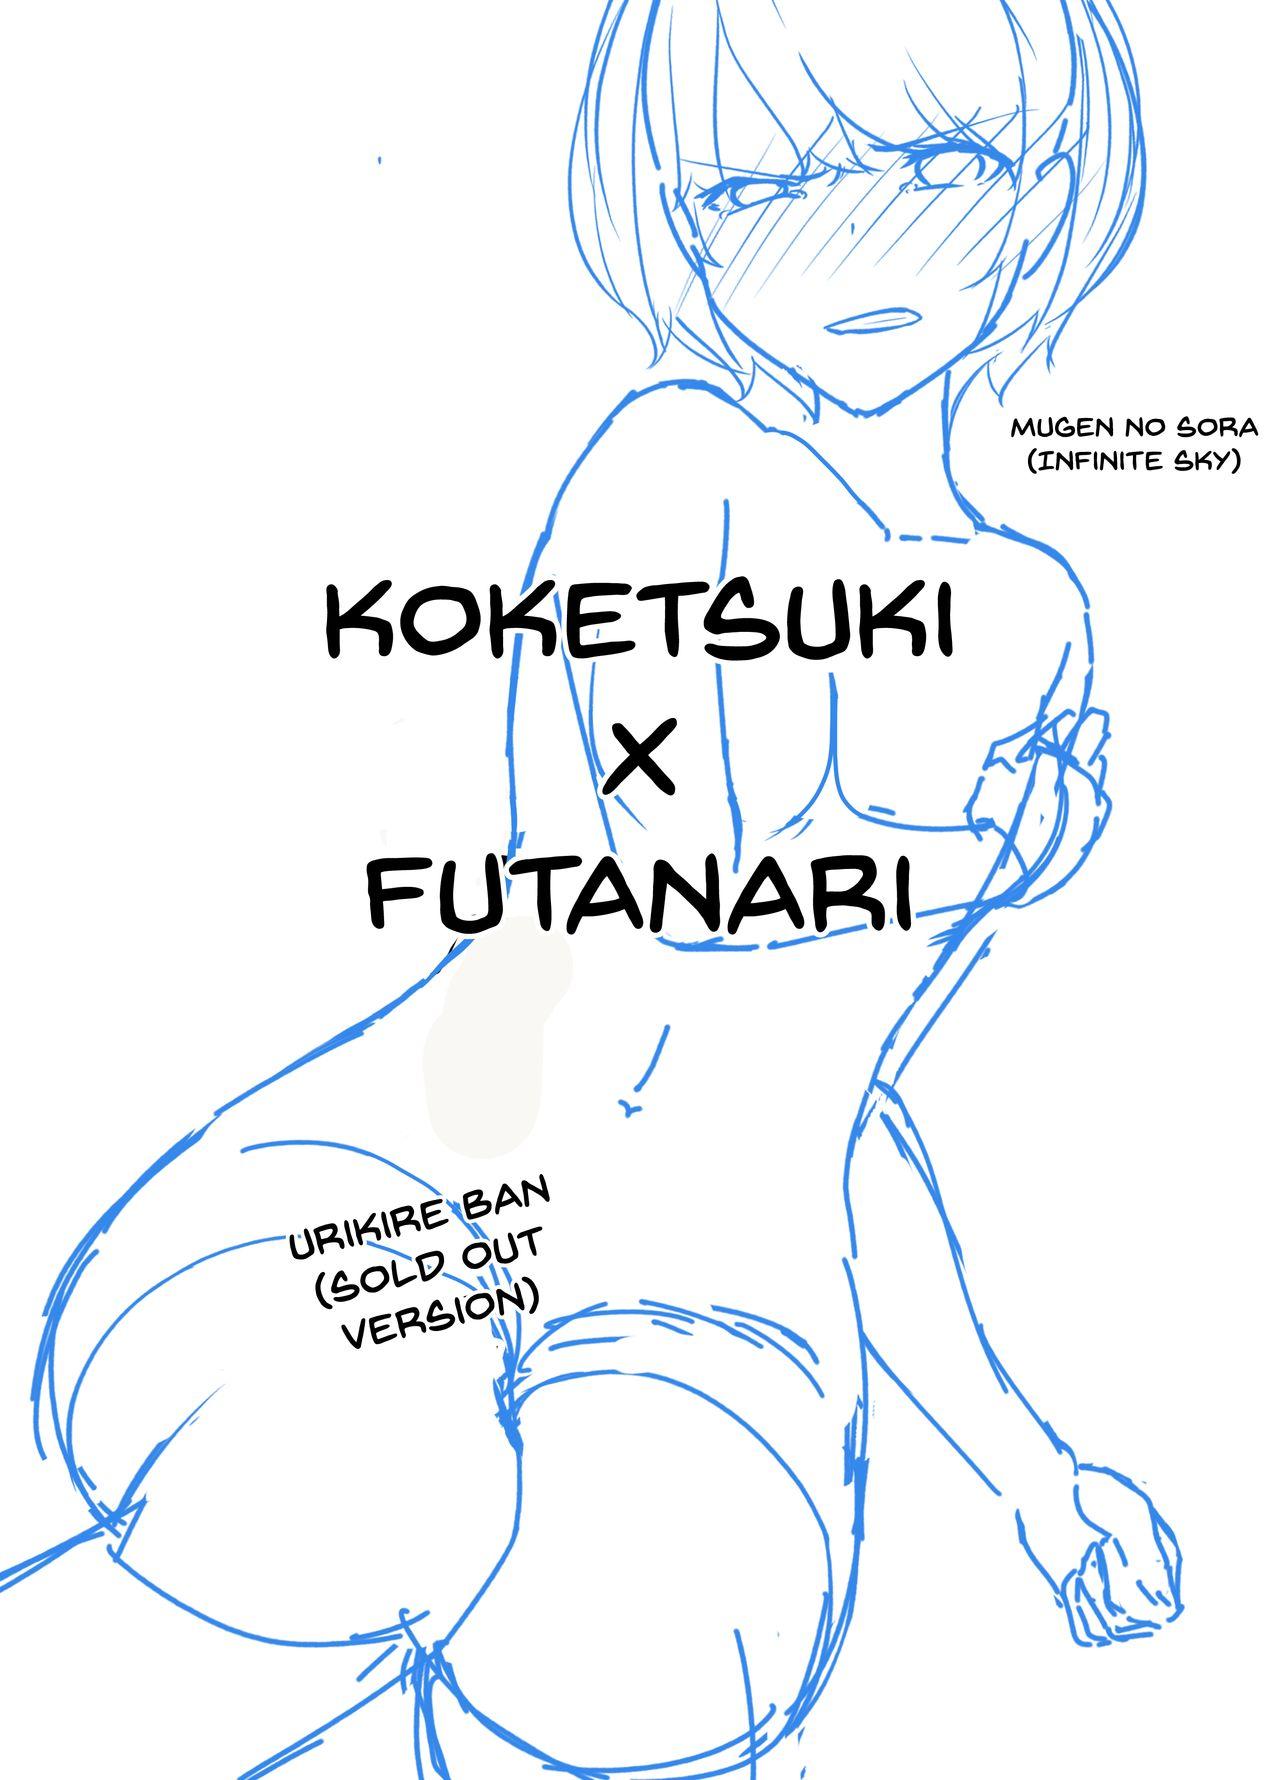 Koketsuki x Futanari 3